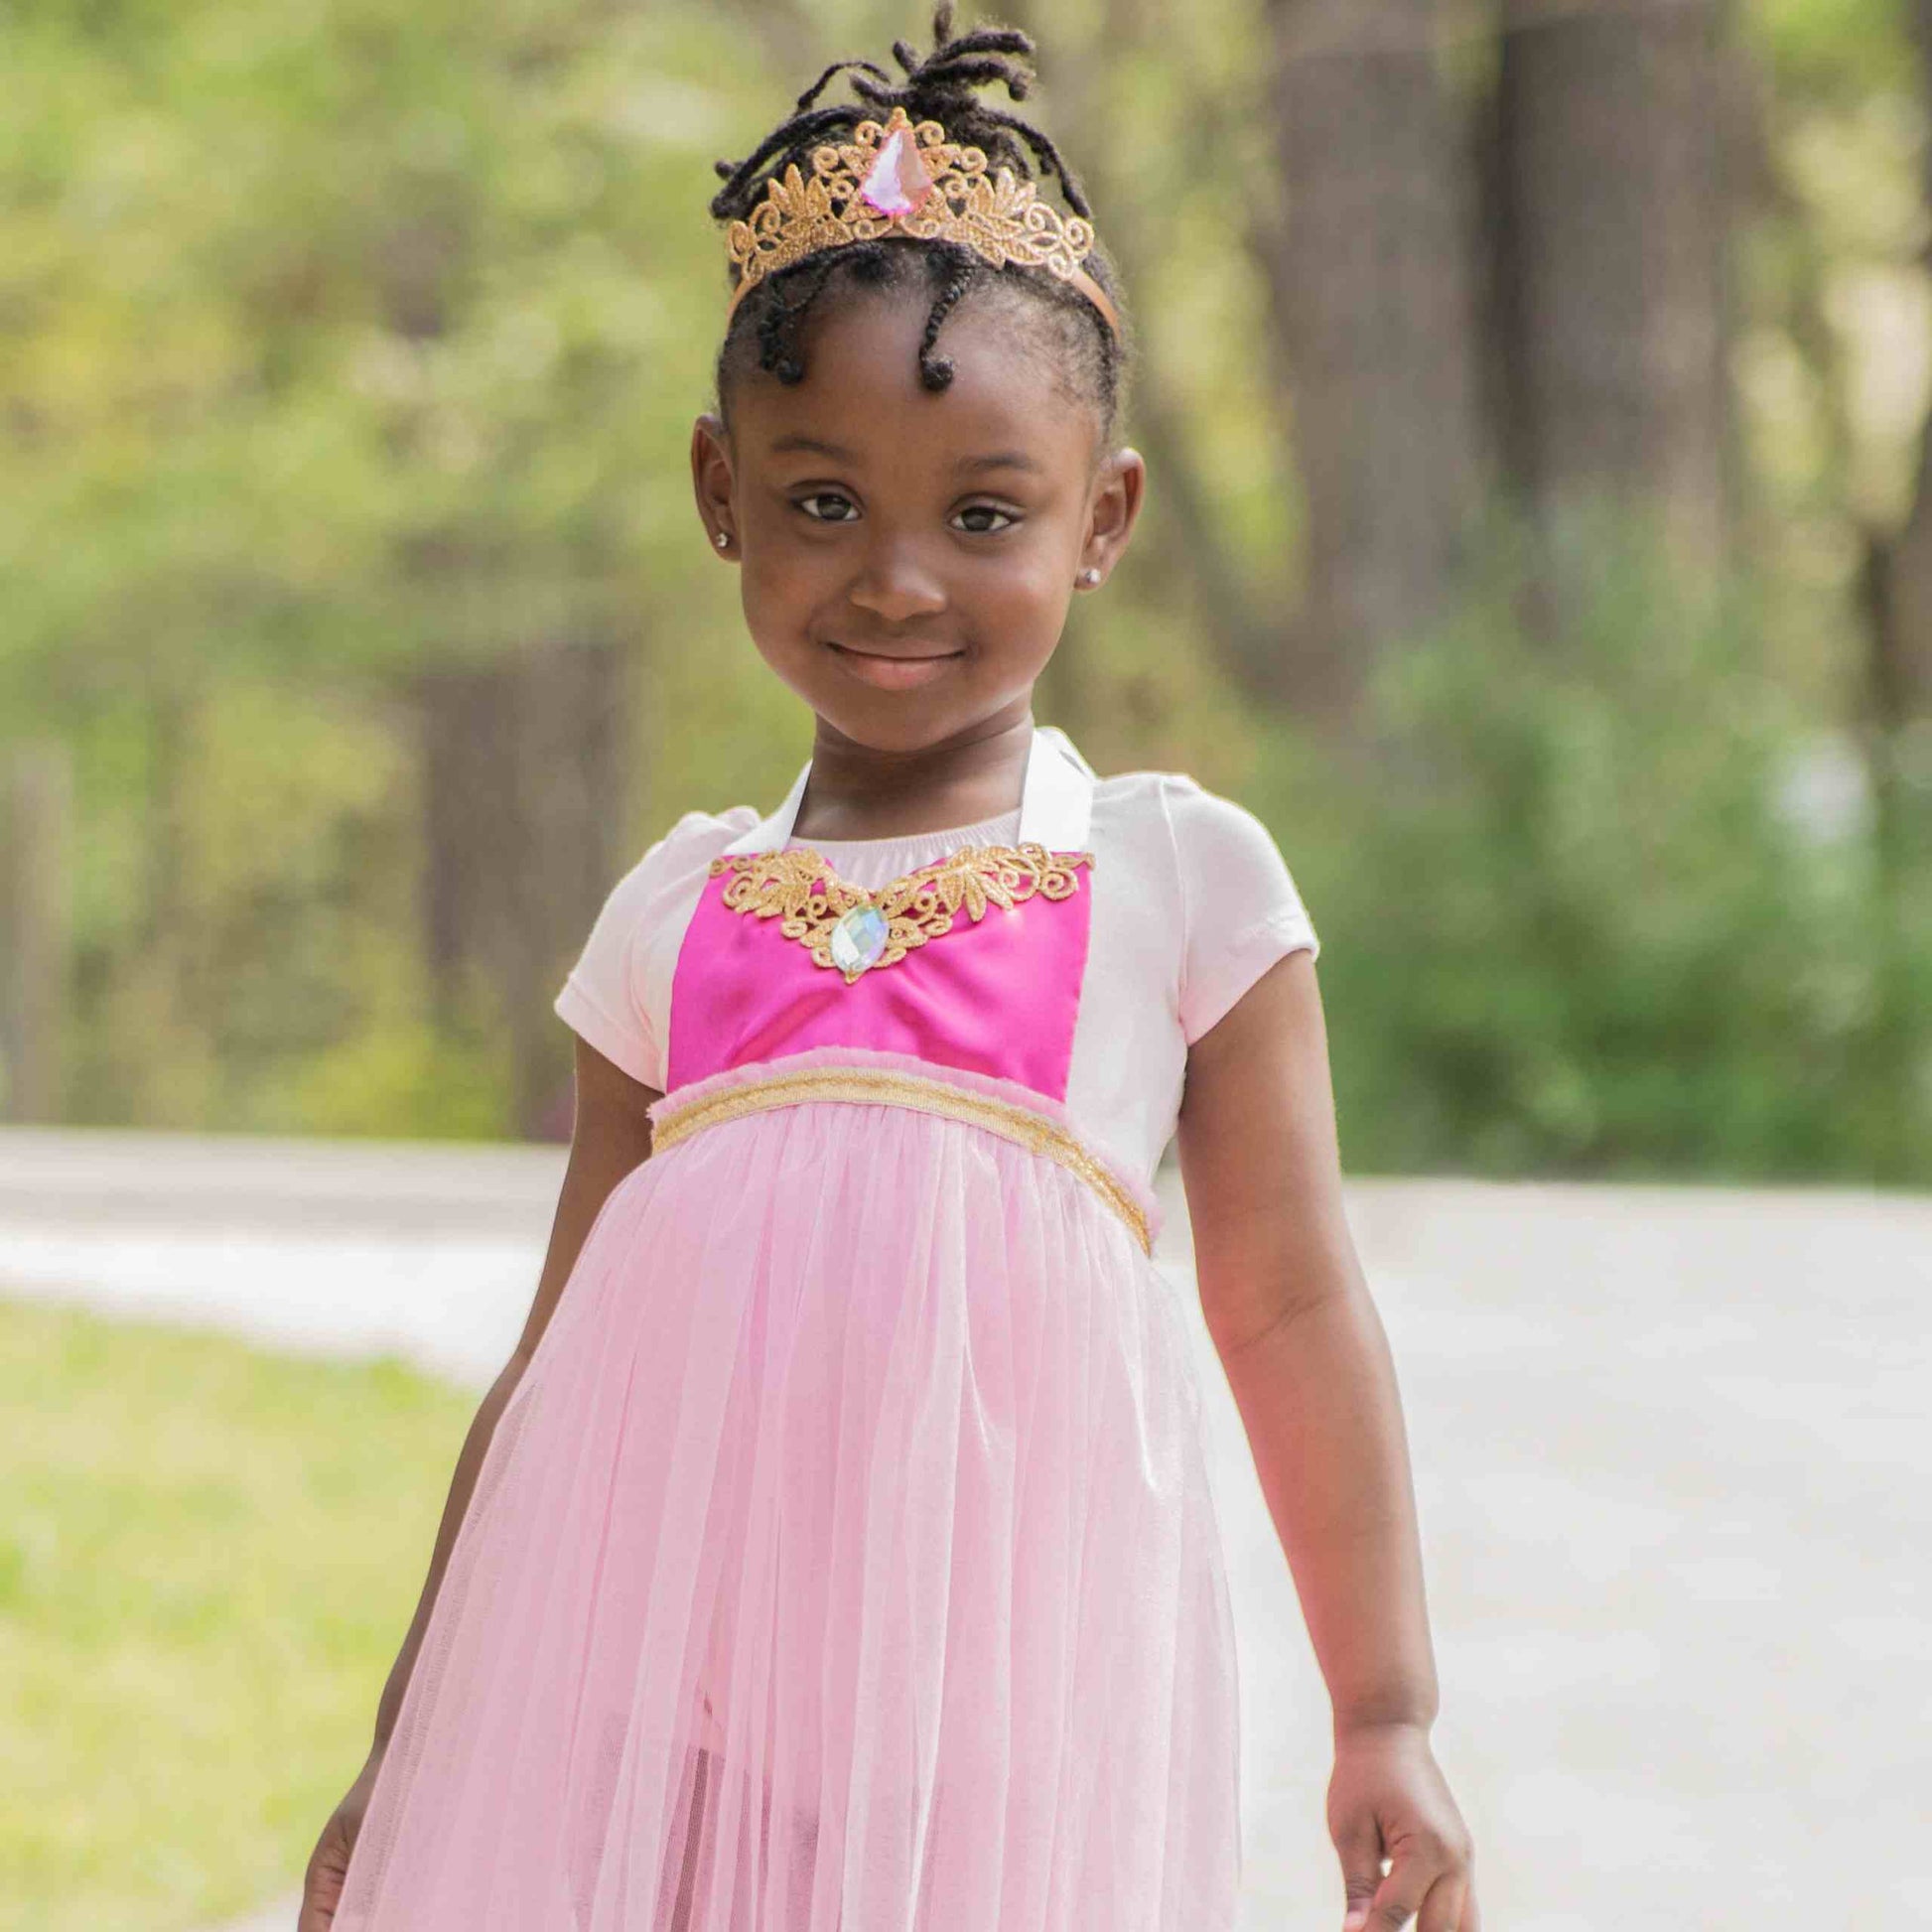 a little girl wearing a pink dress and a tiara